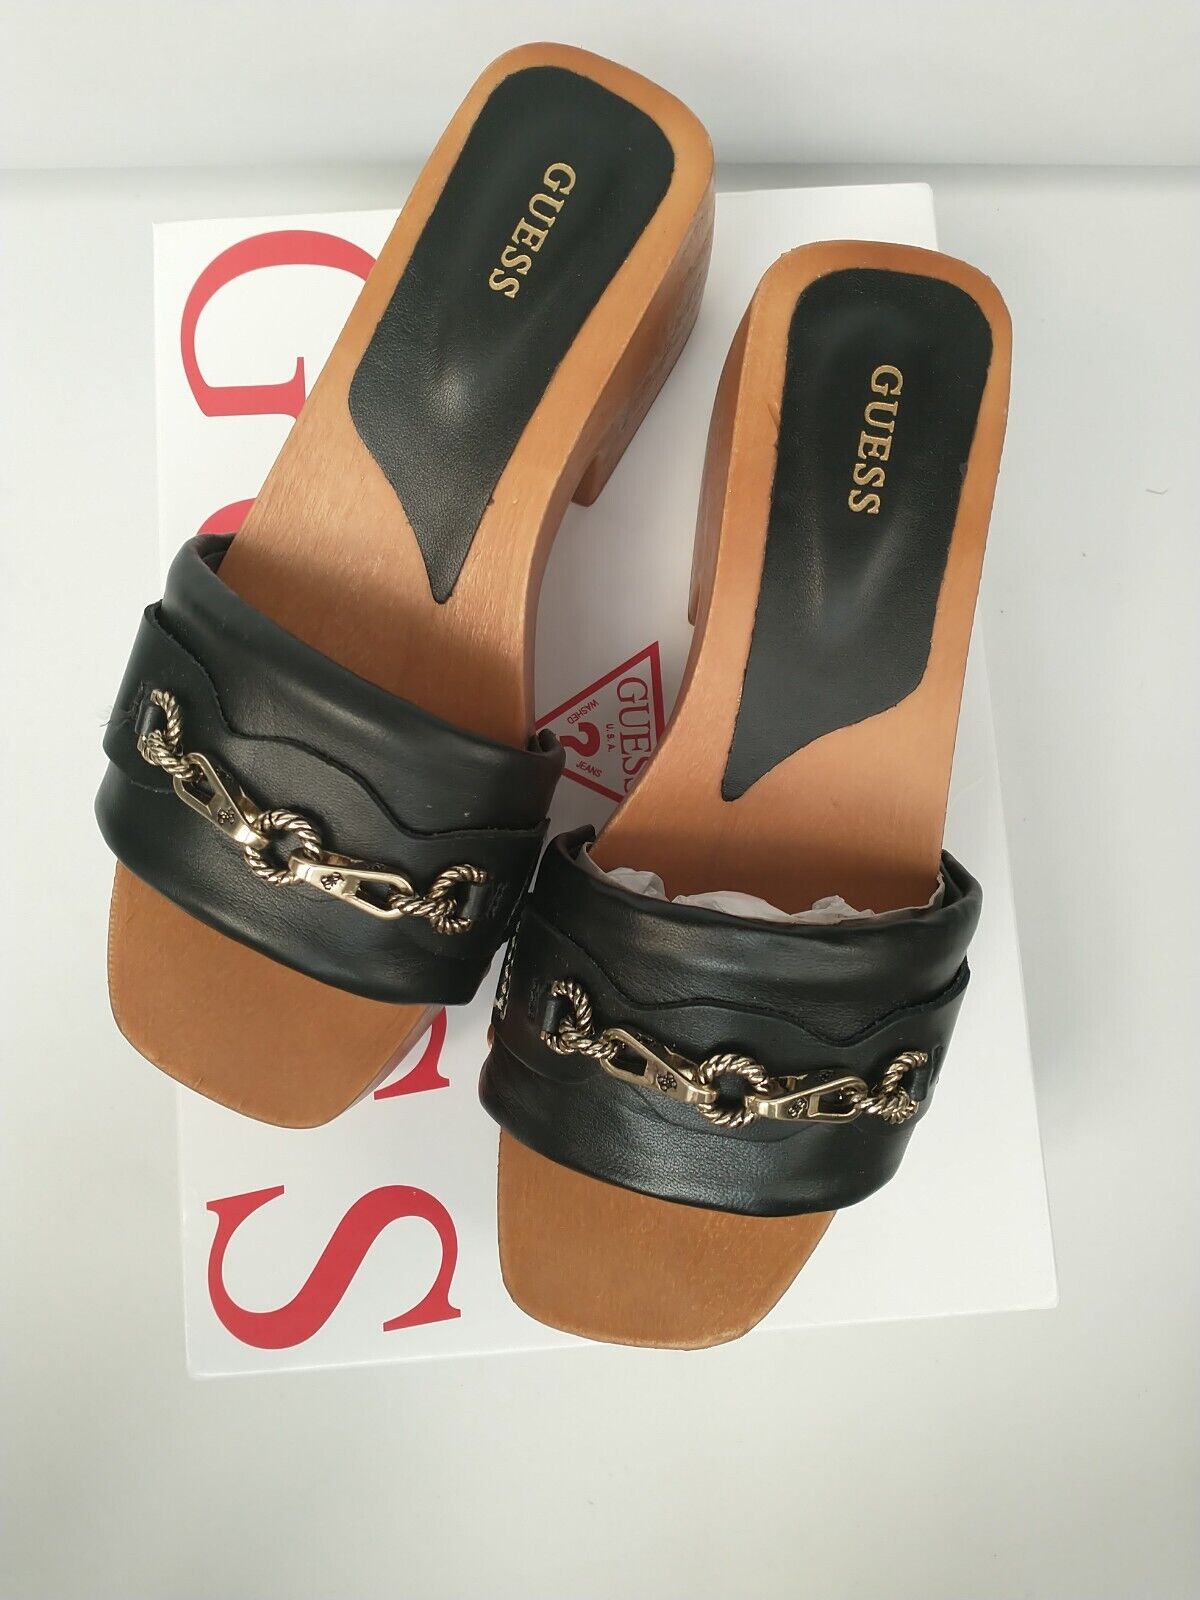 Guess Wooden Clog Sandal Ladies Size UK 4. ****RefVS1